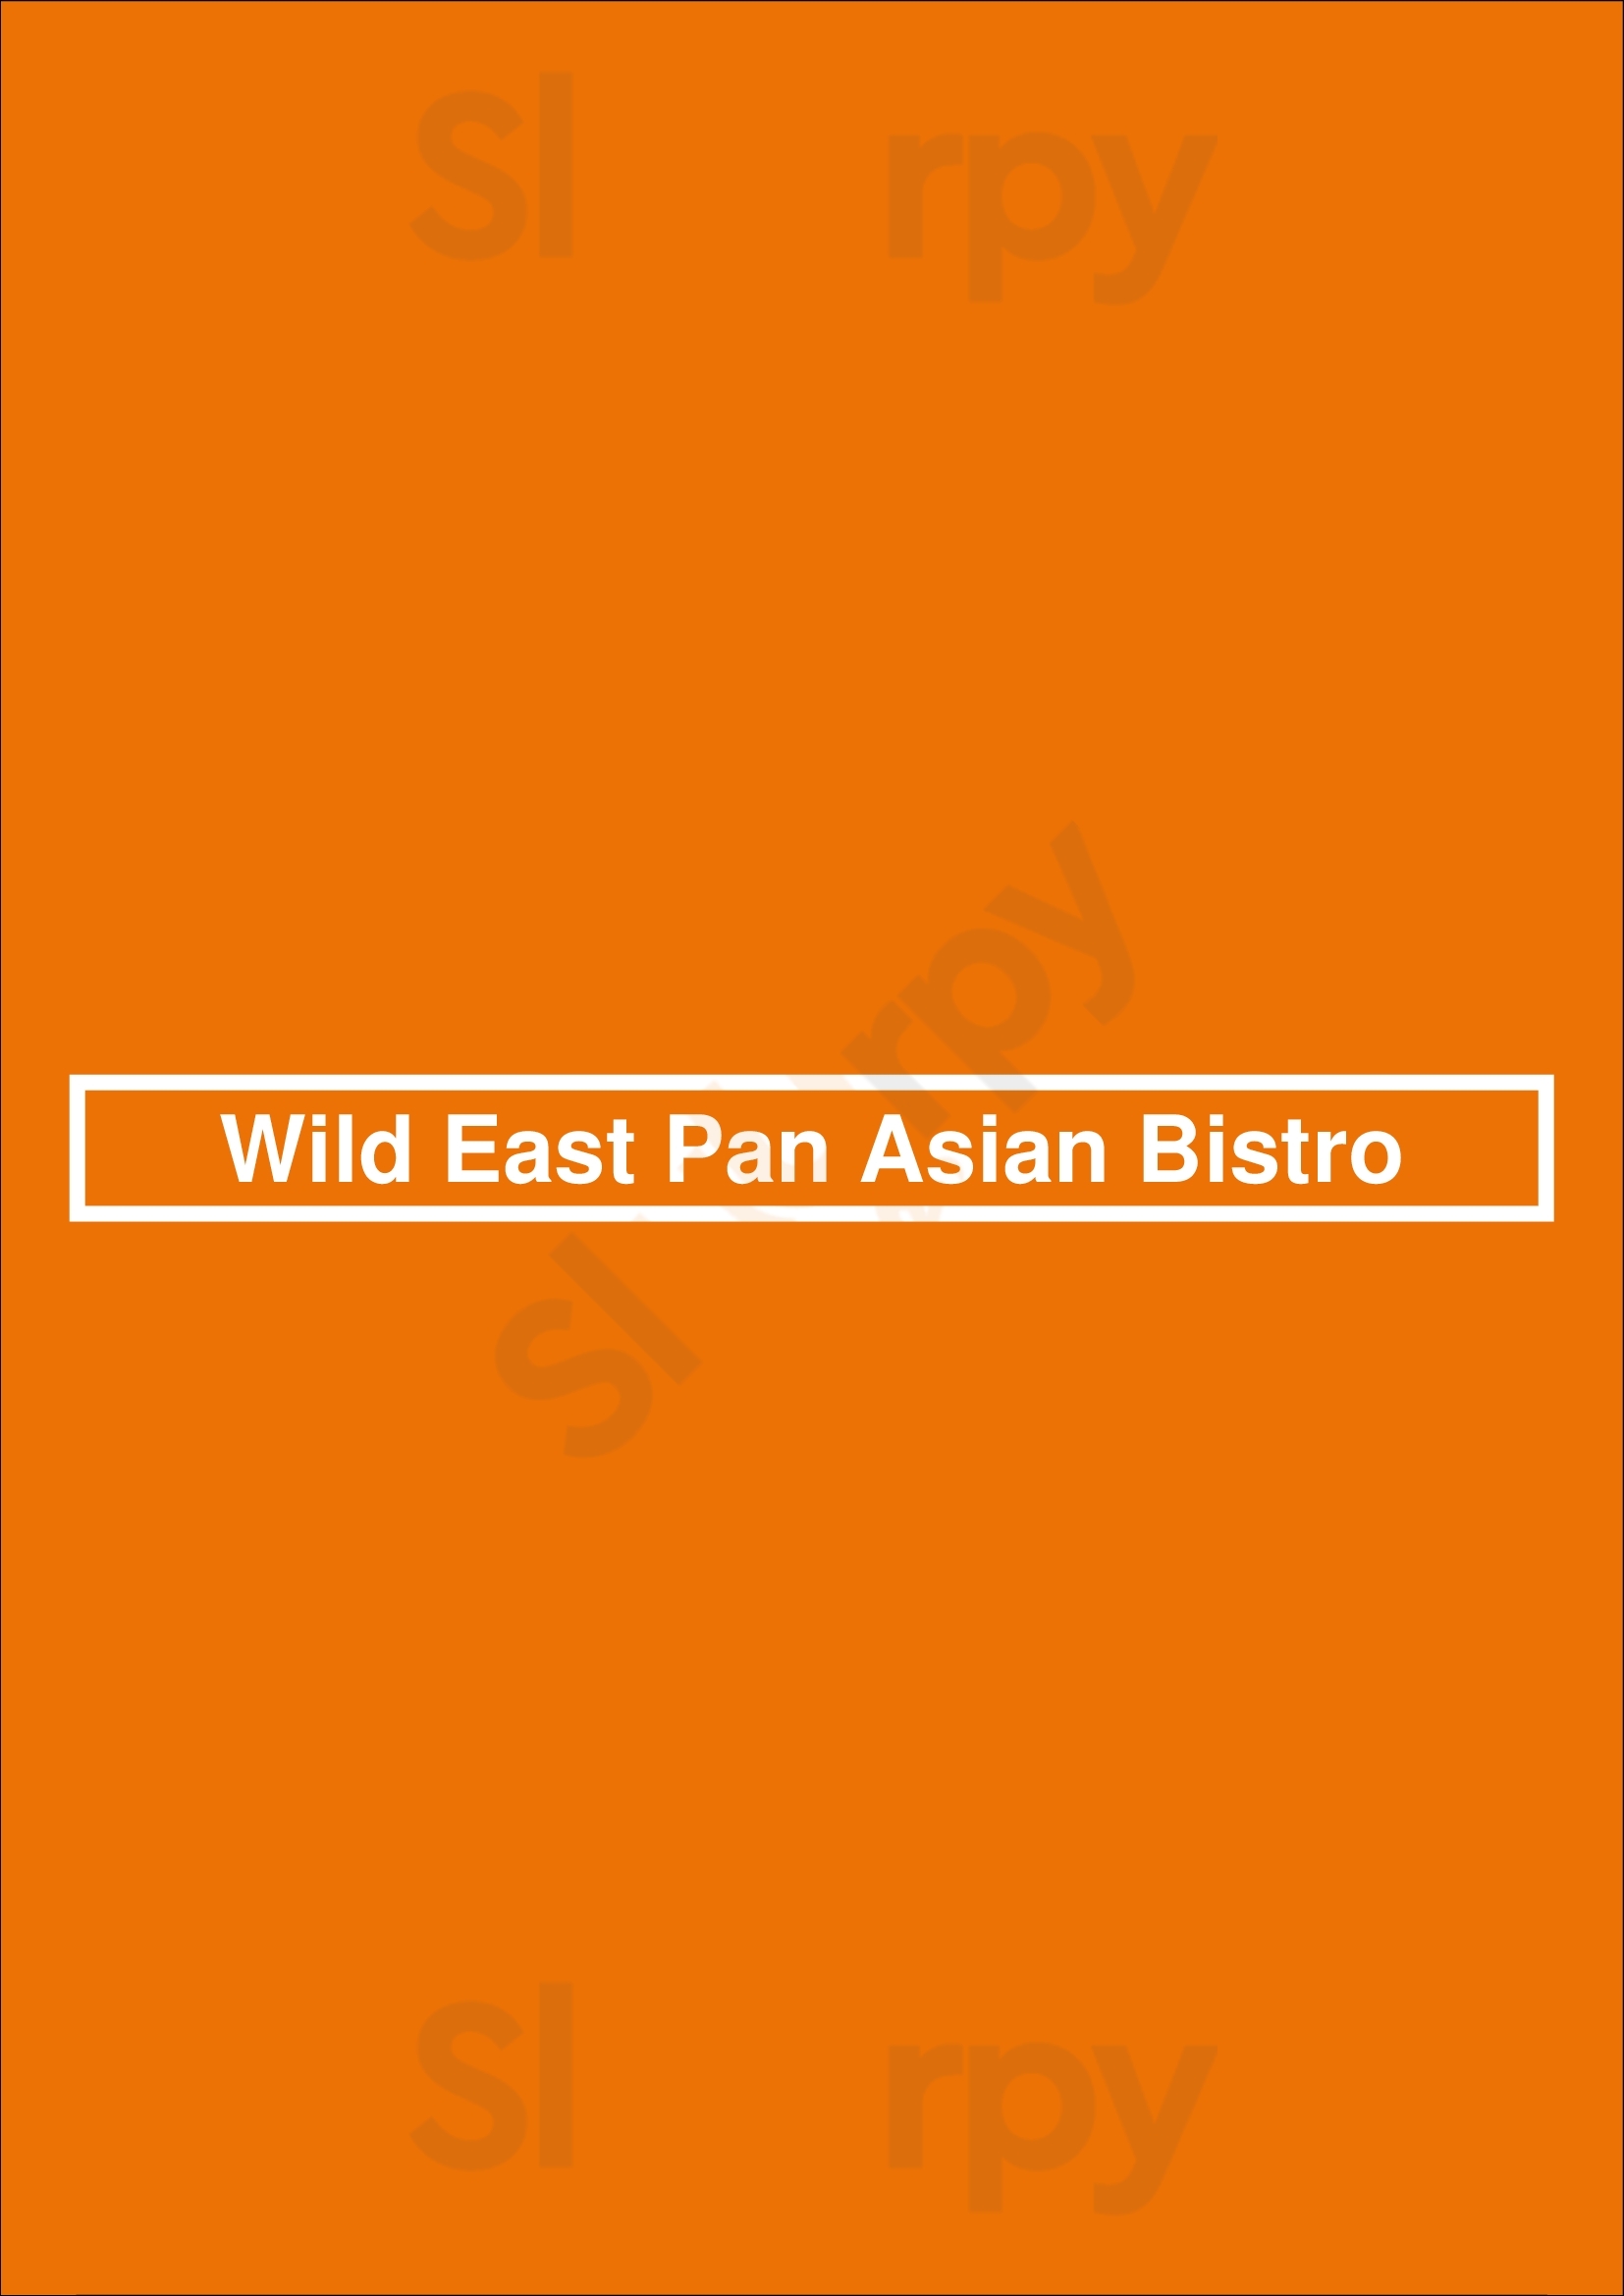 Wild East Pan Asian Bistro Charlotte Menu - 1